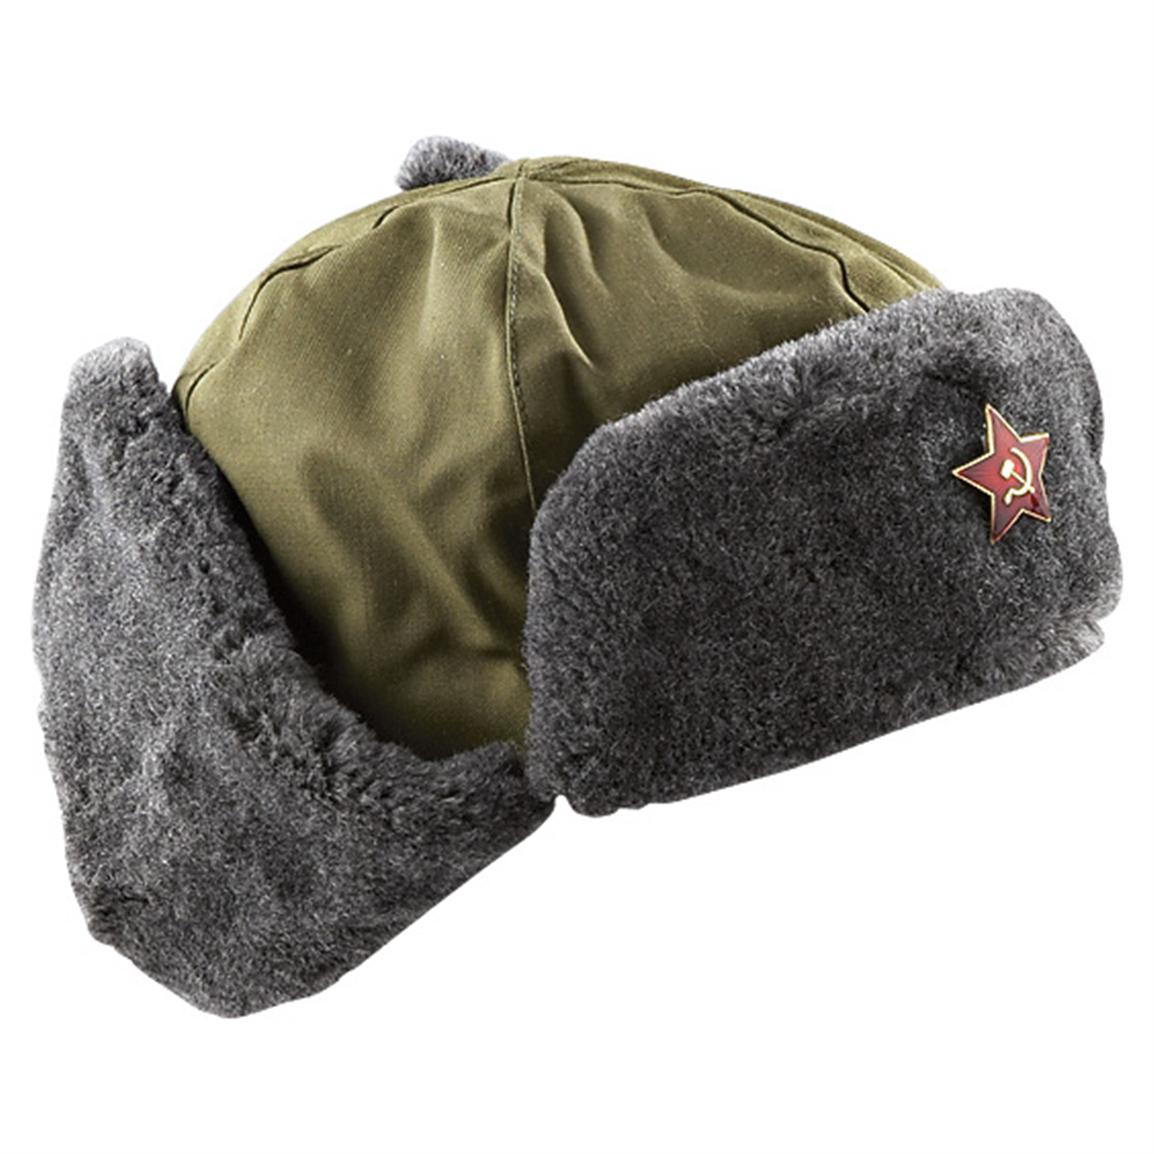 Soviet Army Hat